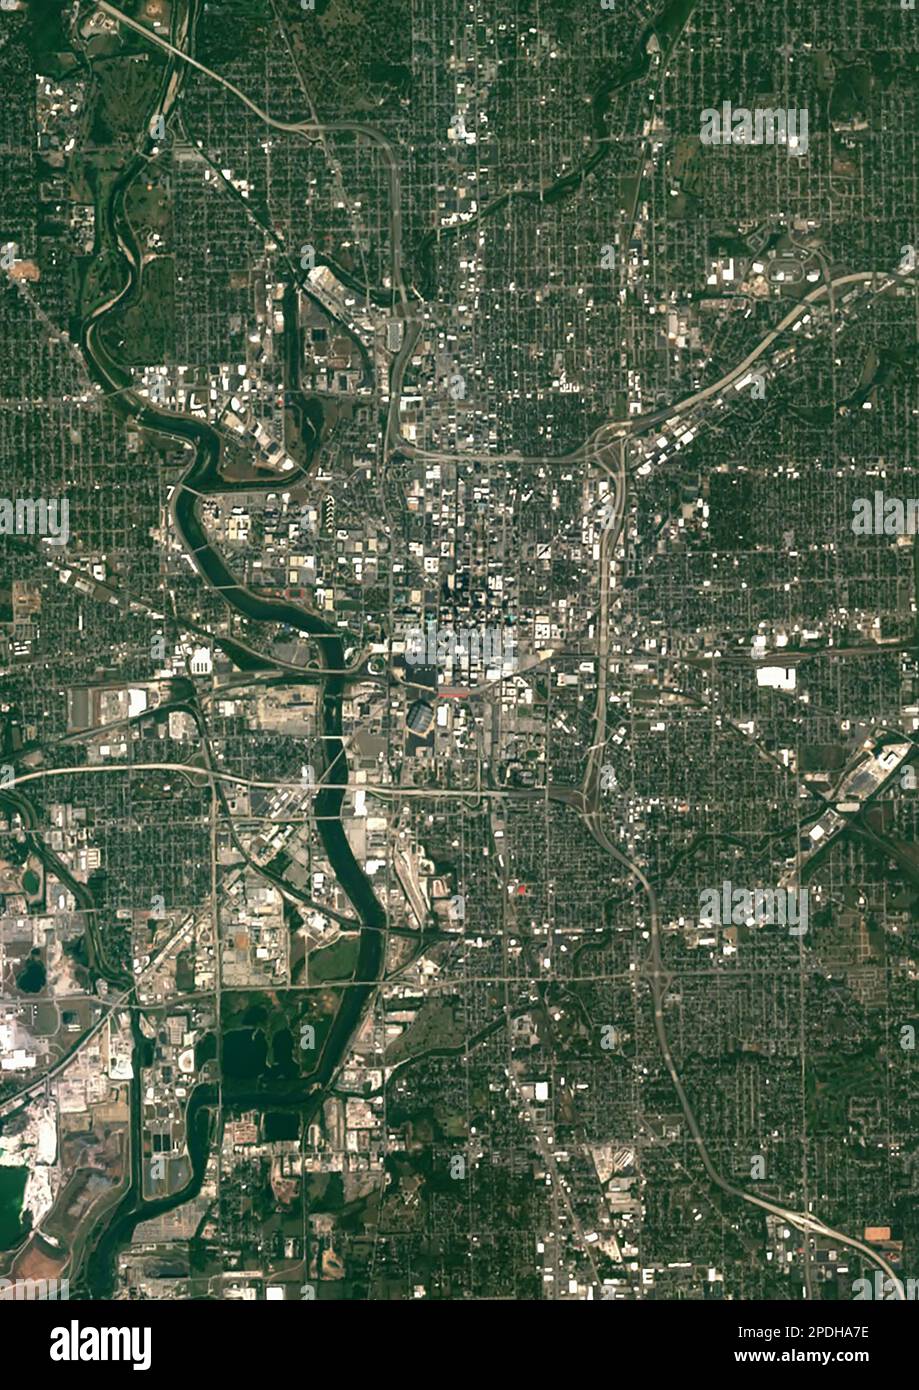 Indianapolis Indiana Usa Satellite Image 2PDHA7E 